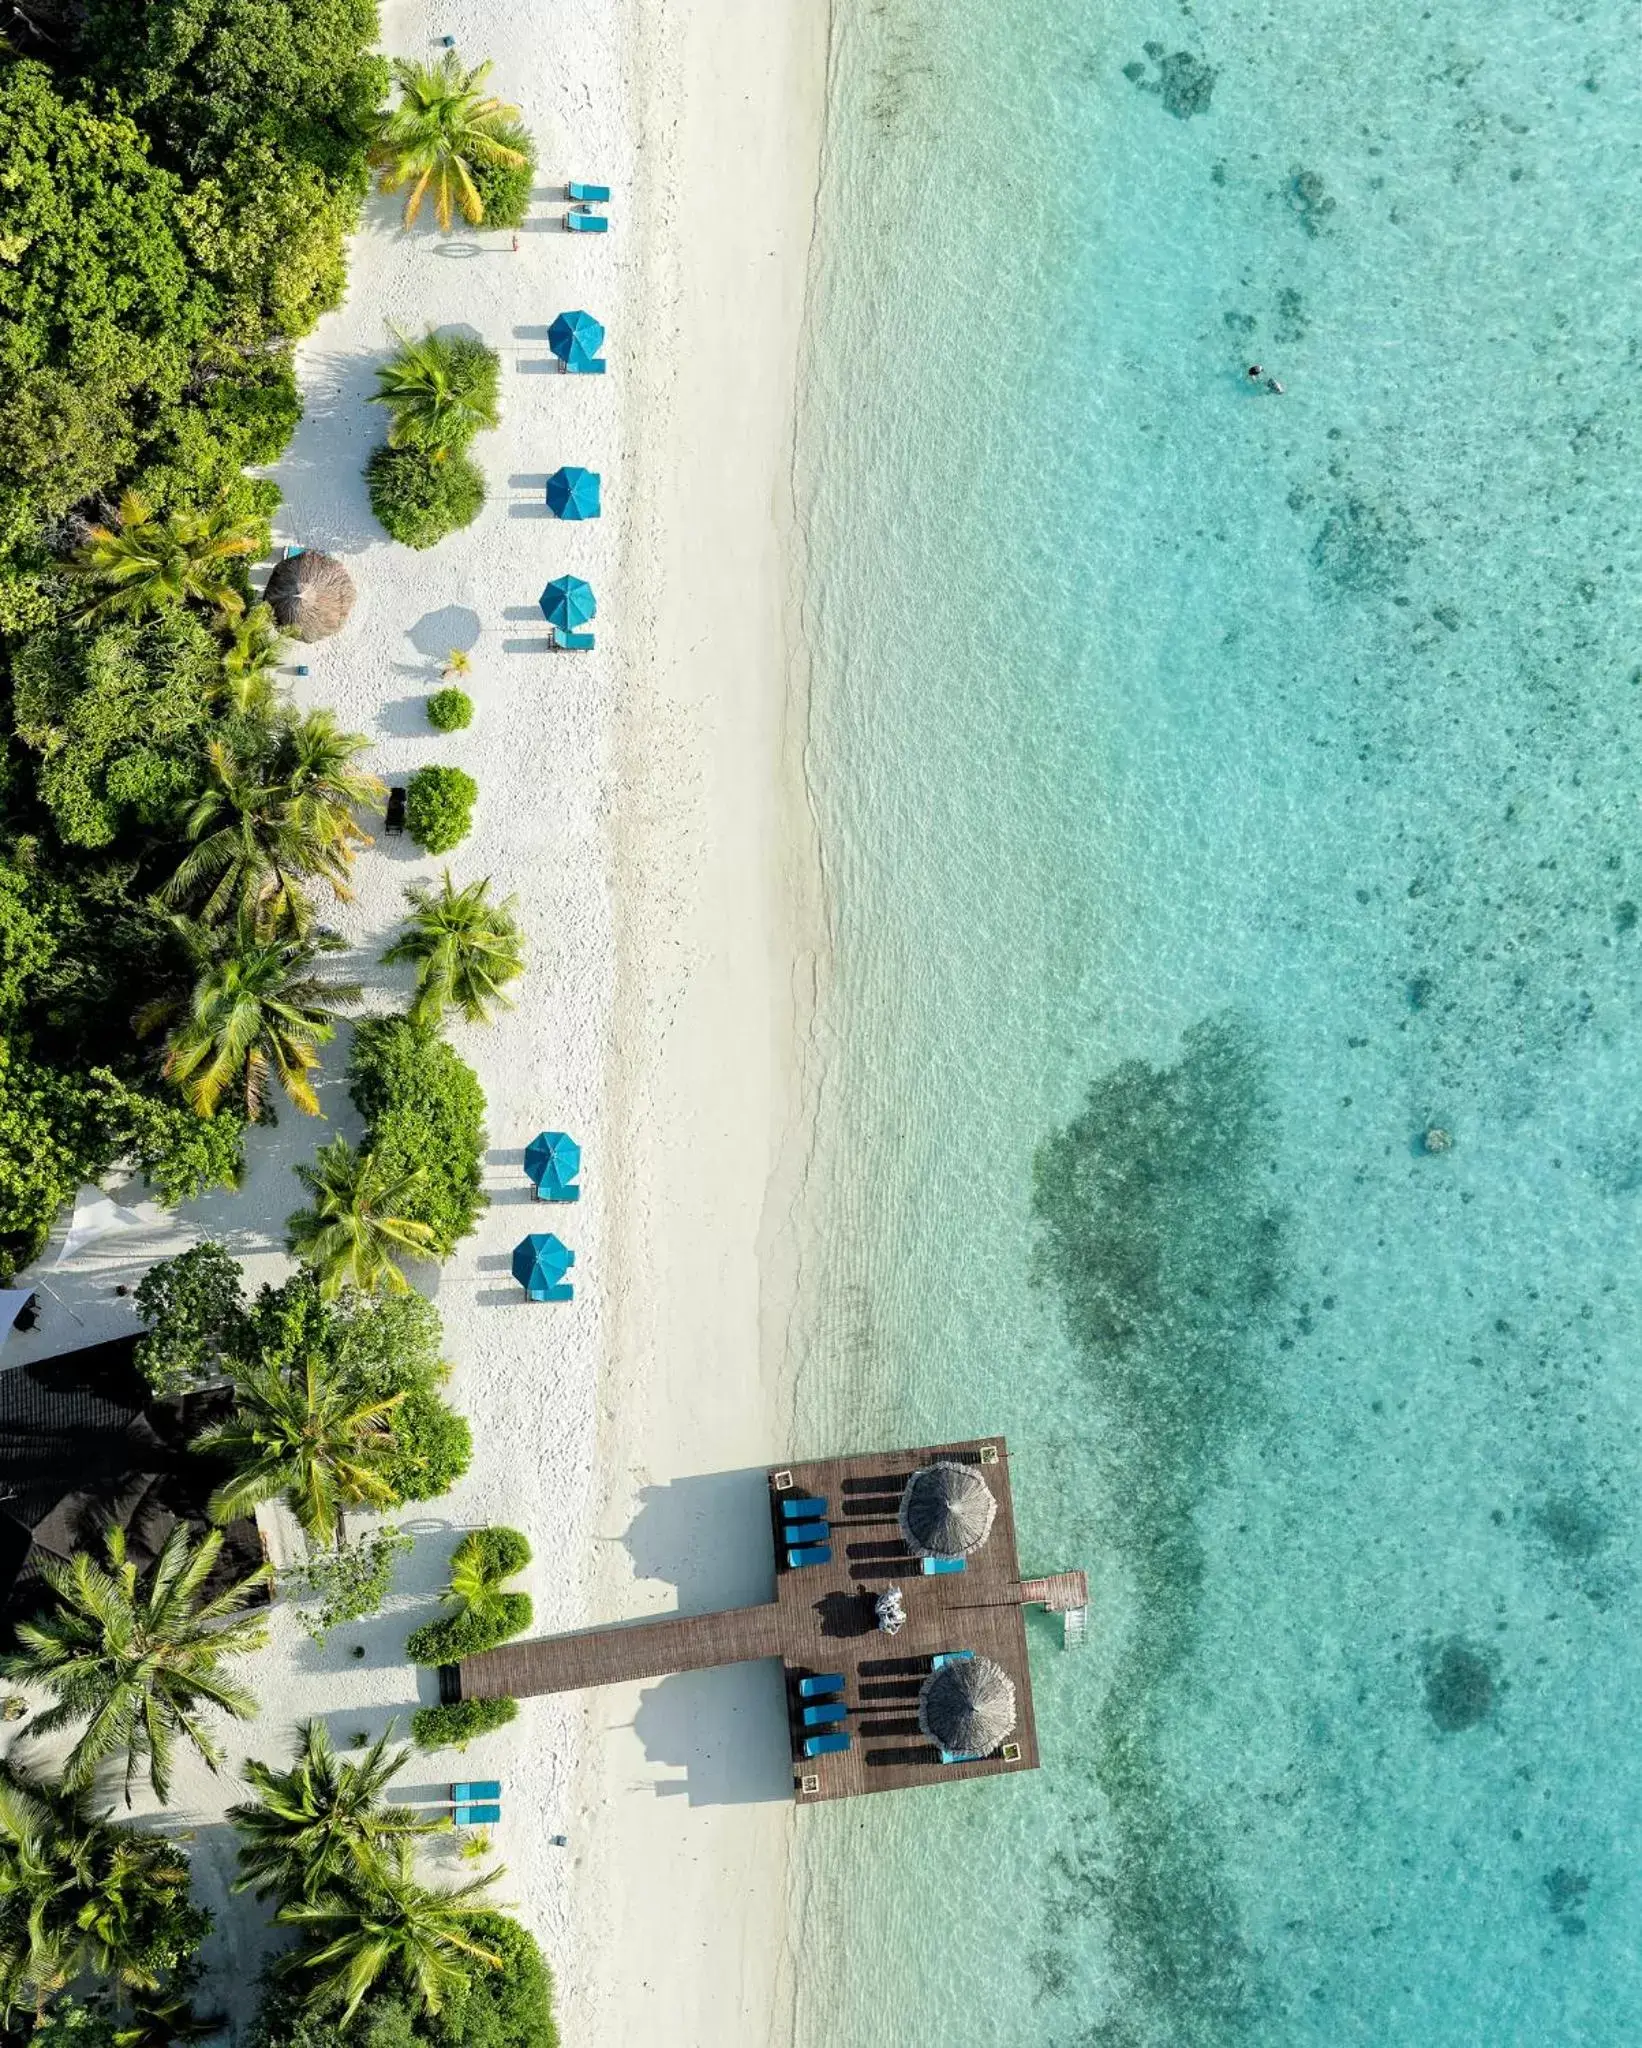 Day, Bird's-eye View in Canareef Resort Maldives